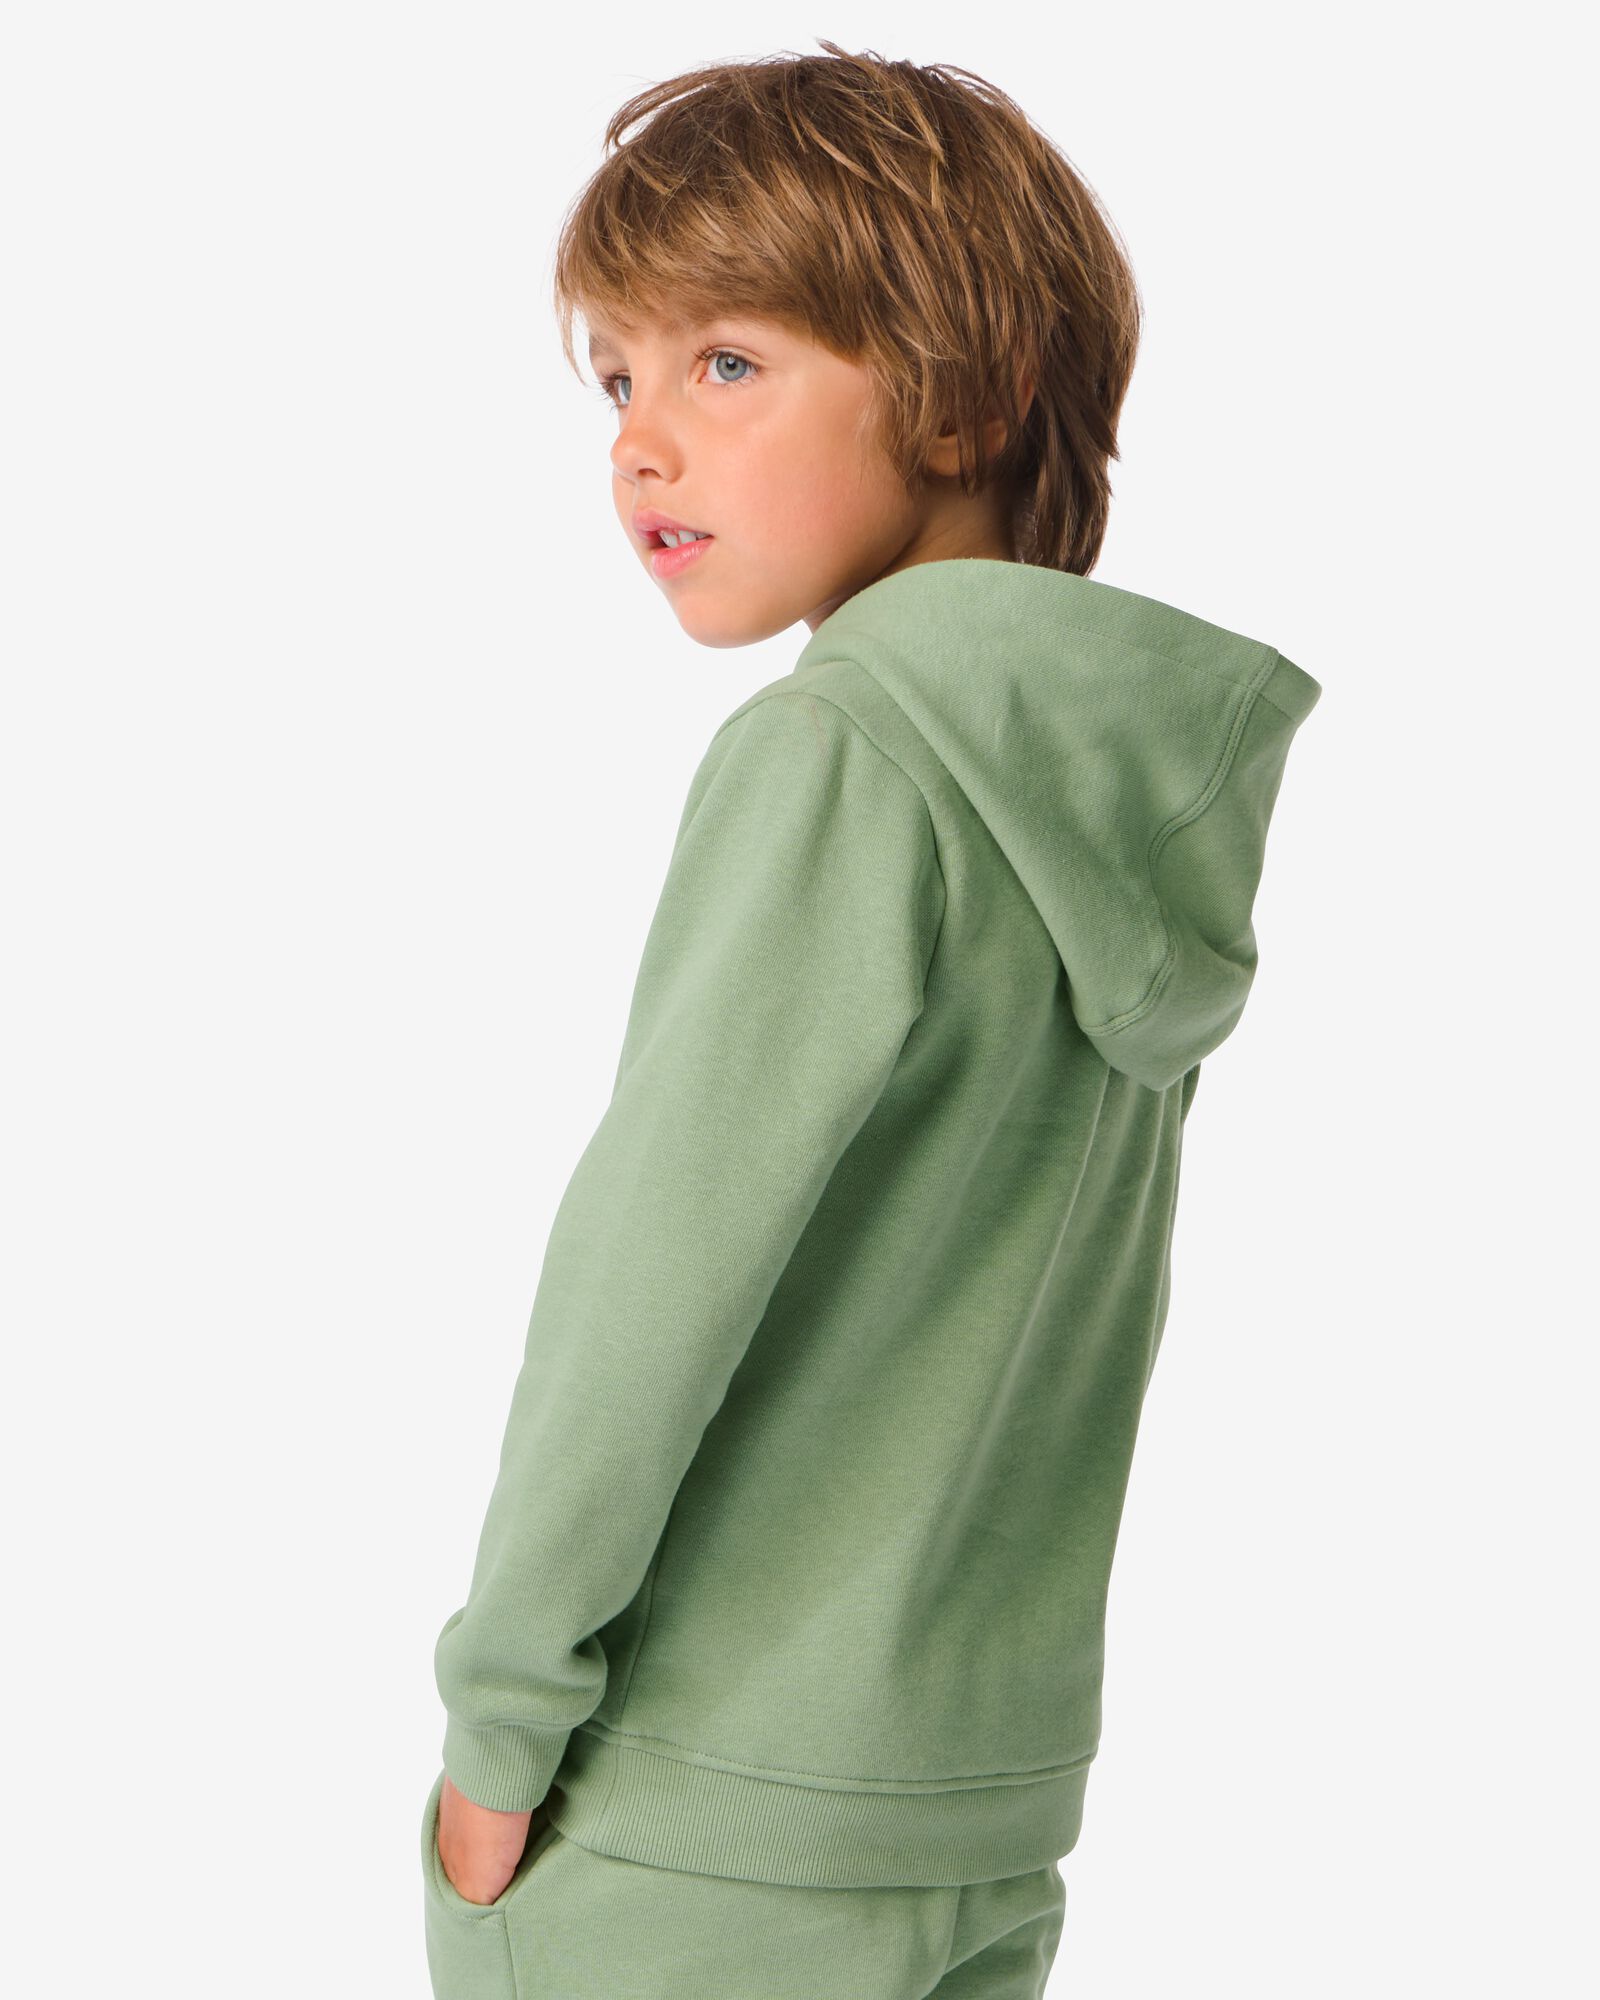 kinder hoodie met kangeroezak groen 86/92 - 30769427 - HEMA